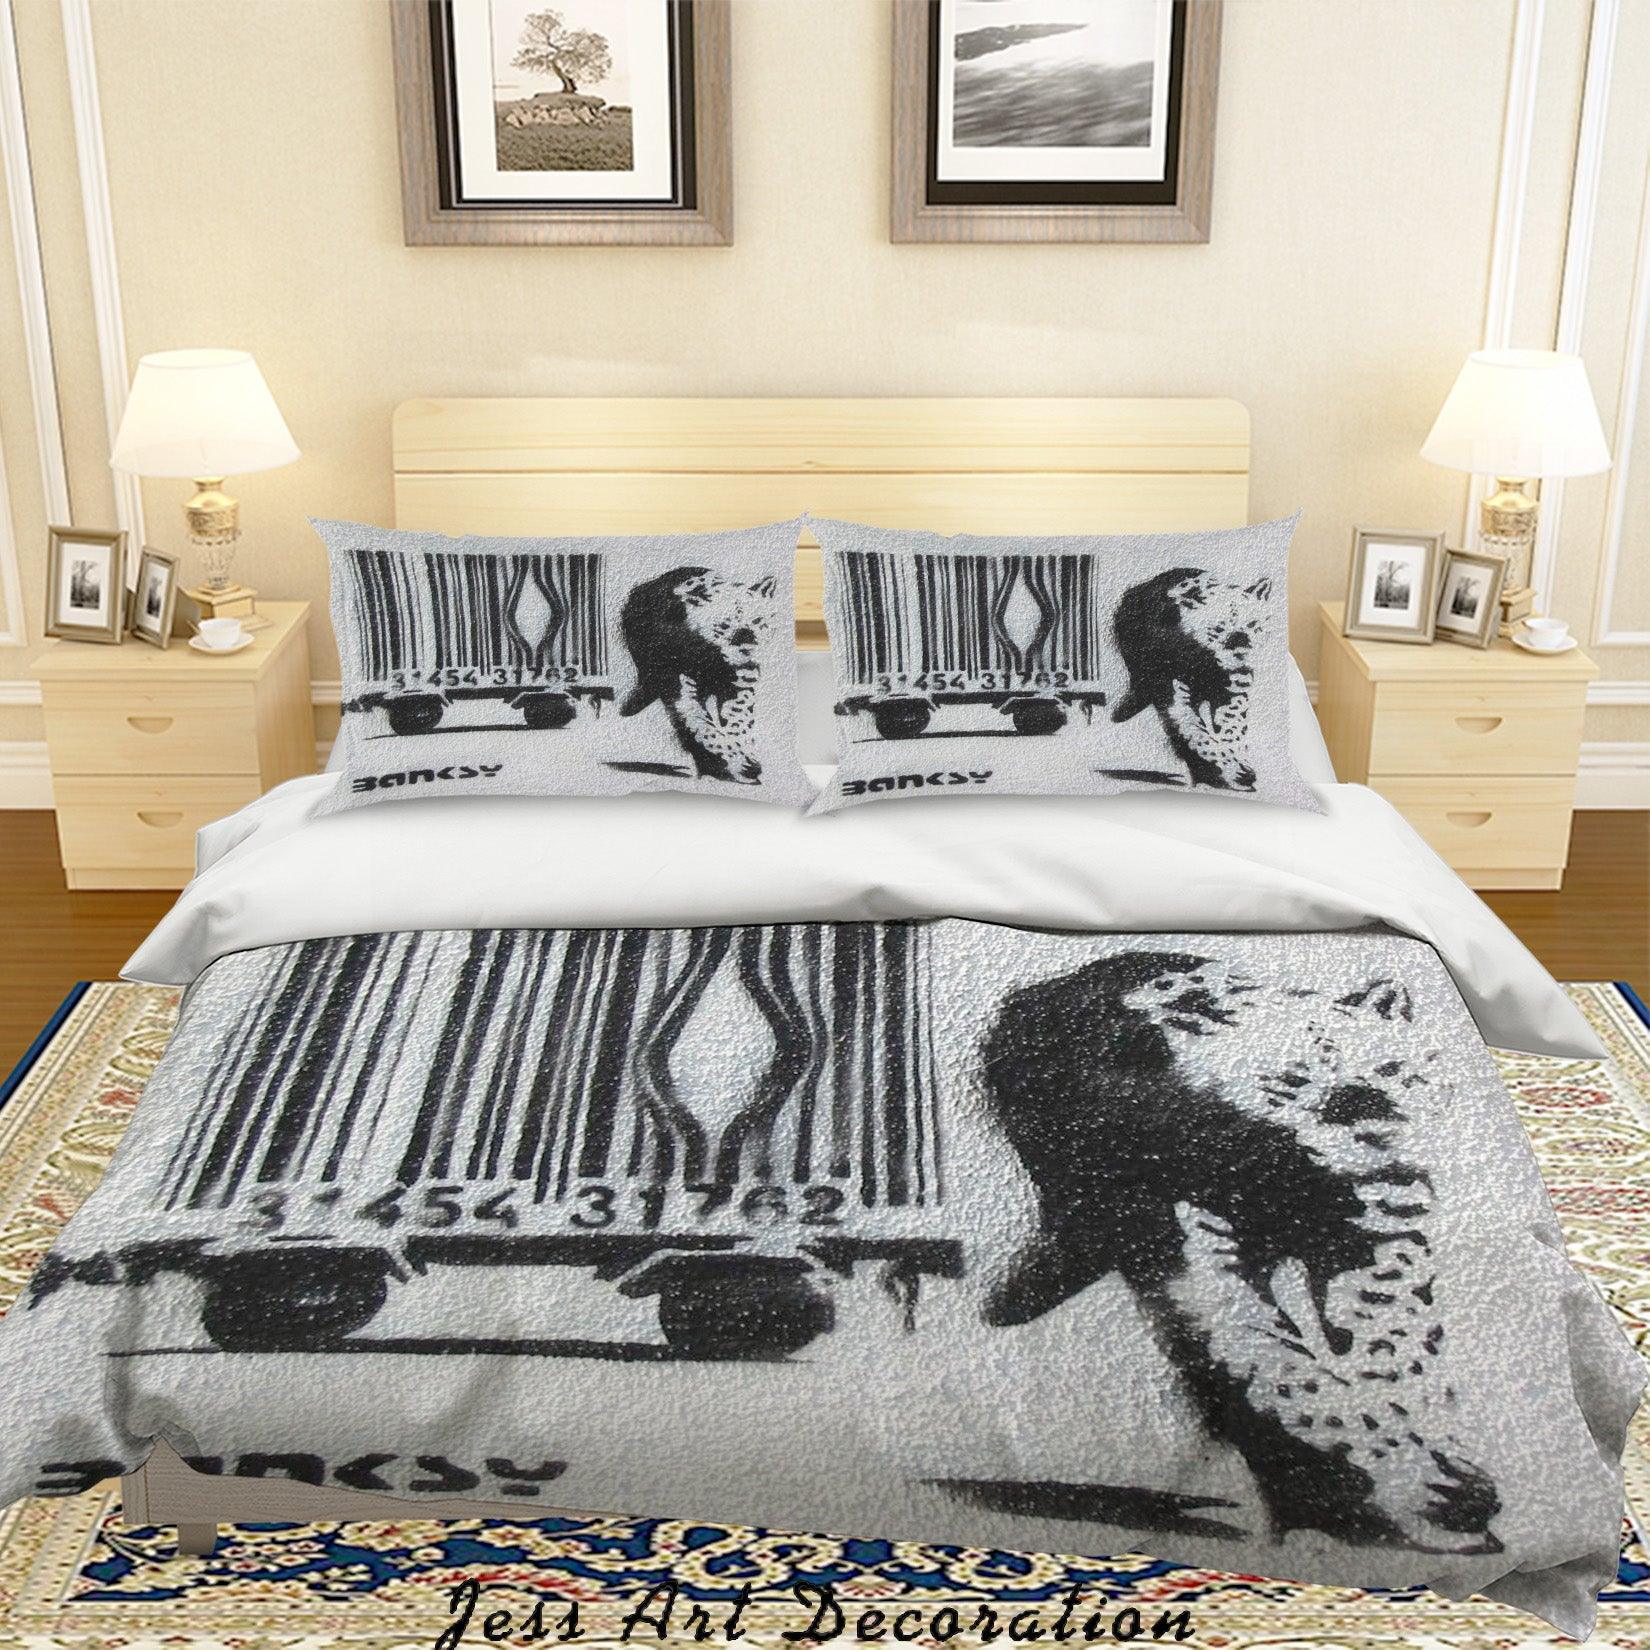 3D Black White Banksy Mural Leopard Barcode Quilt Cover Set Bedding Set Duvet Cover Pillowcases  ZY D102- Jess Art Decoration